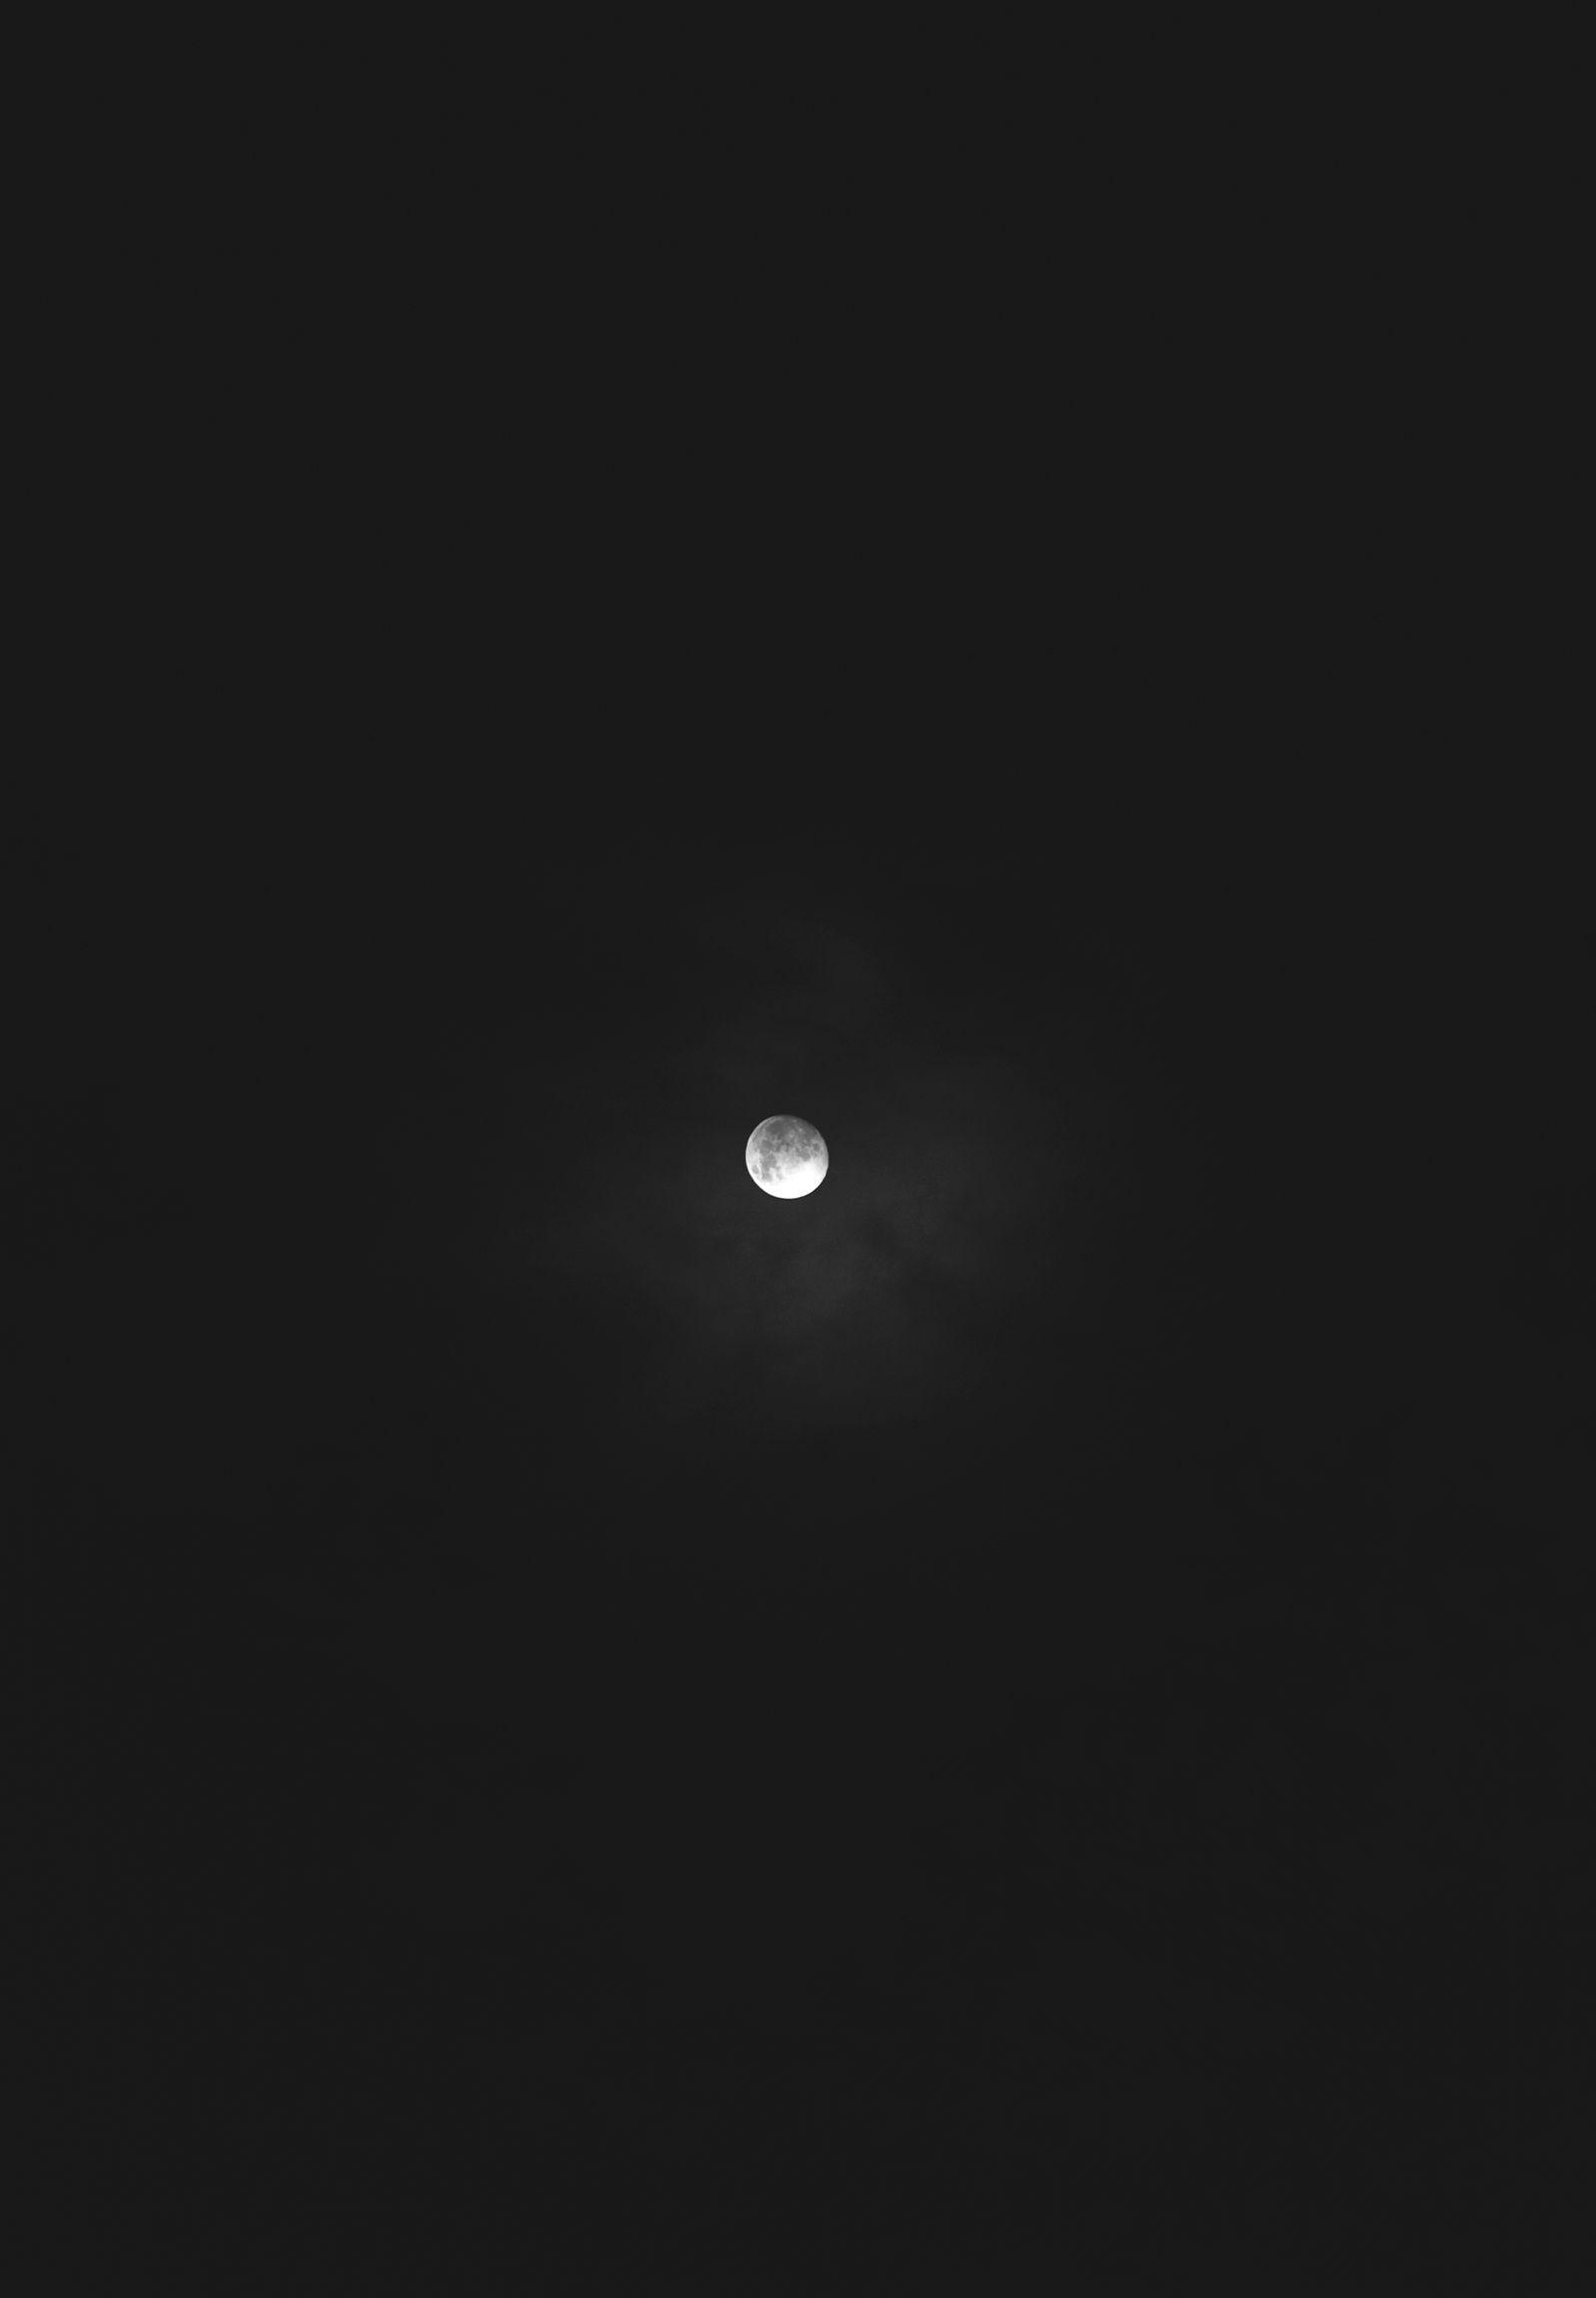 Sky, Night, Dark, Black, HD Grayscale Image, Monochrome Wallpaper